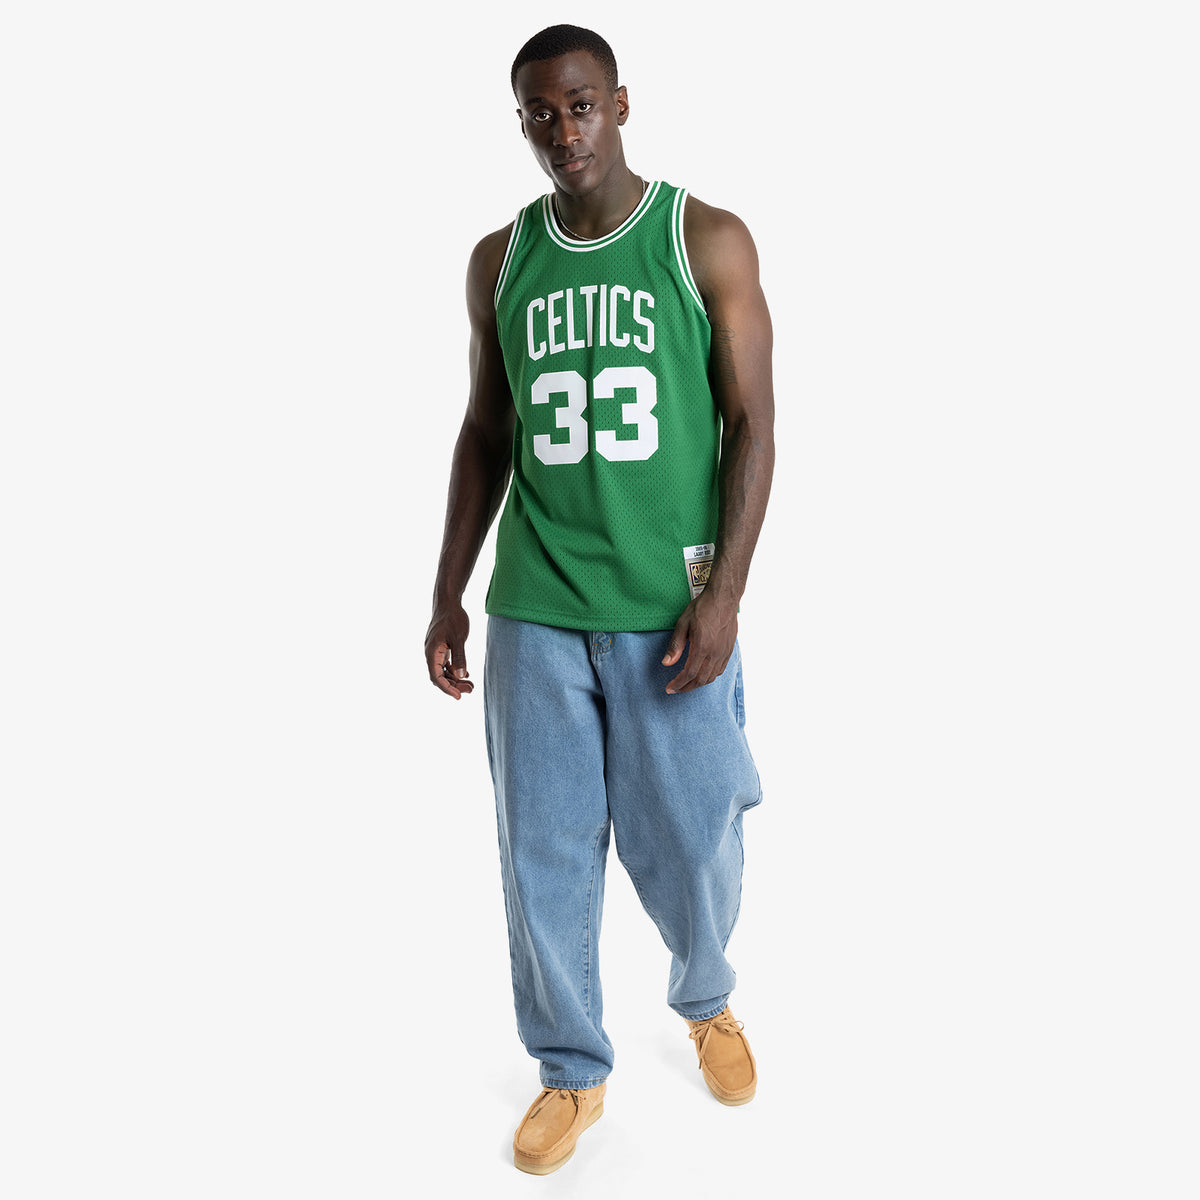 Celtics Larry Bird Black Jersey  Larry bird, Nba shirts, Boston celtics